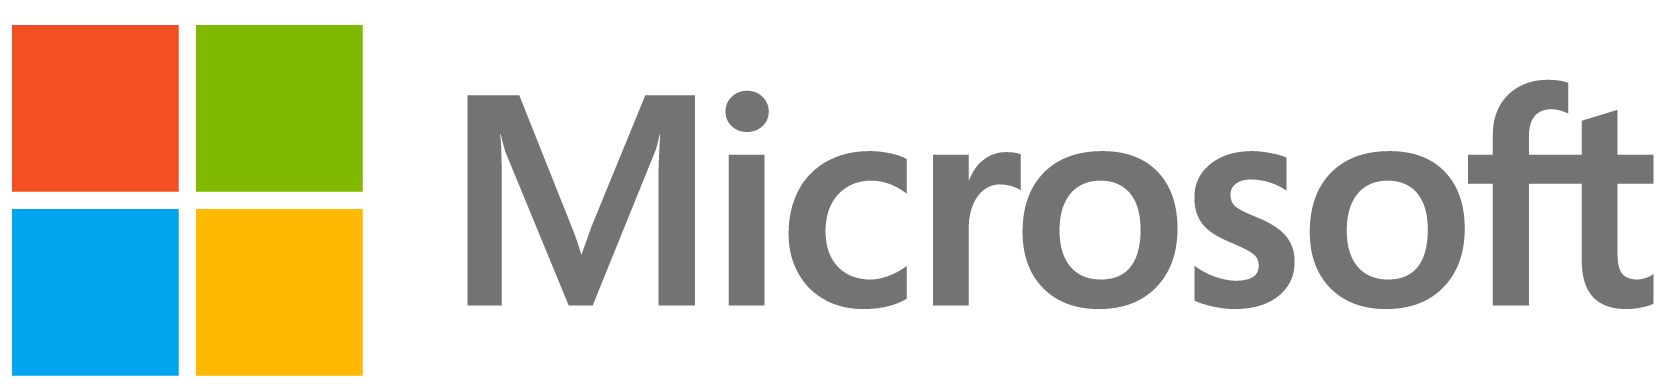 Microsoft_logo_rgb_C-Gray.png